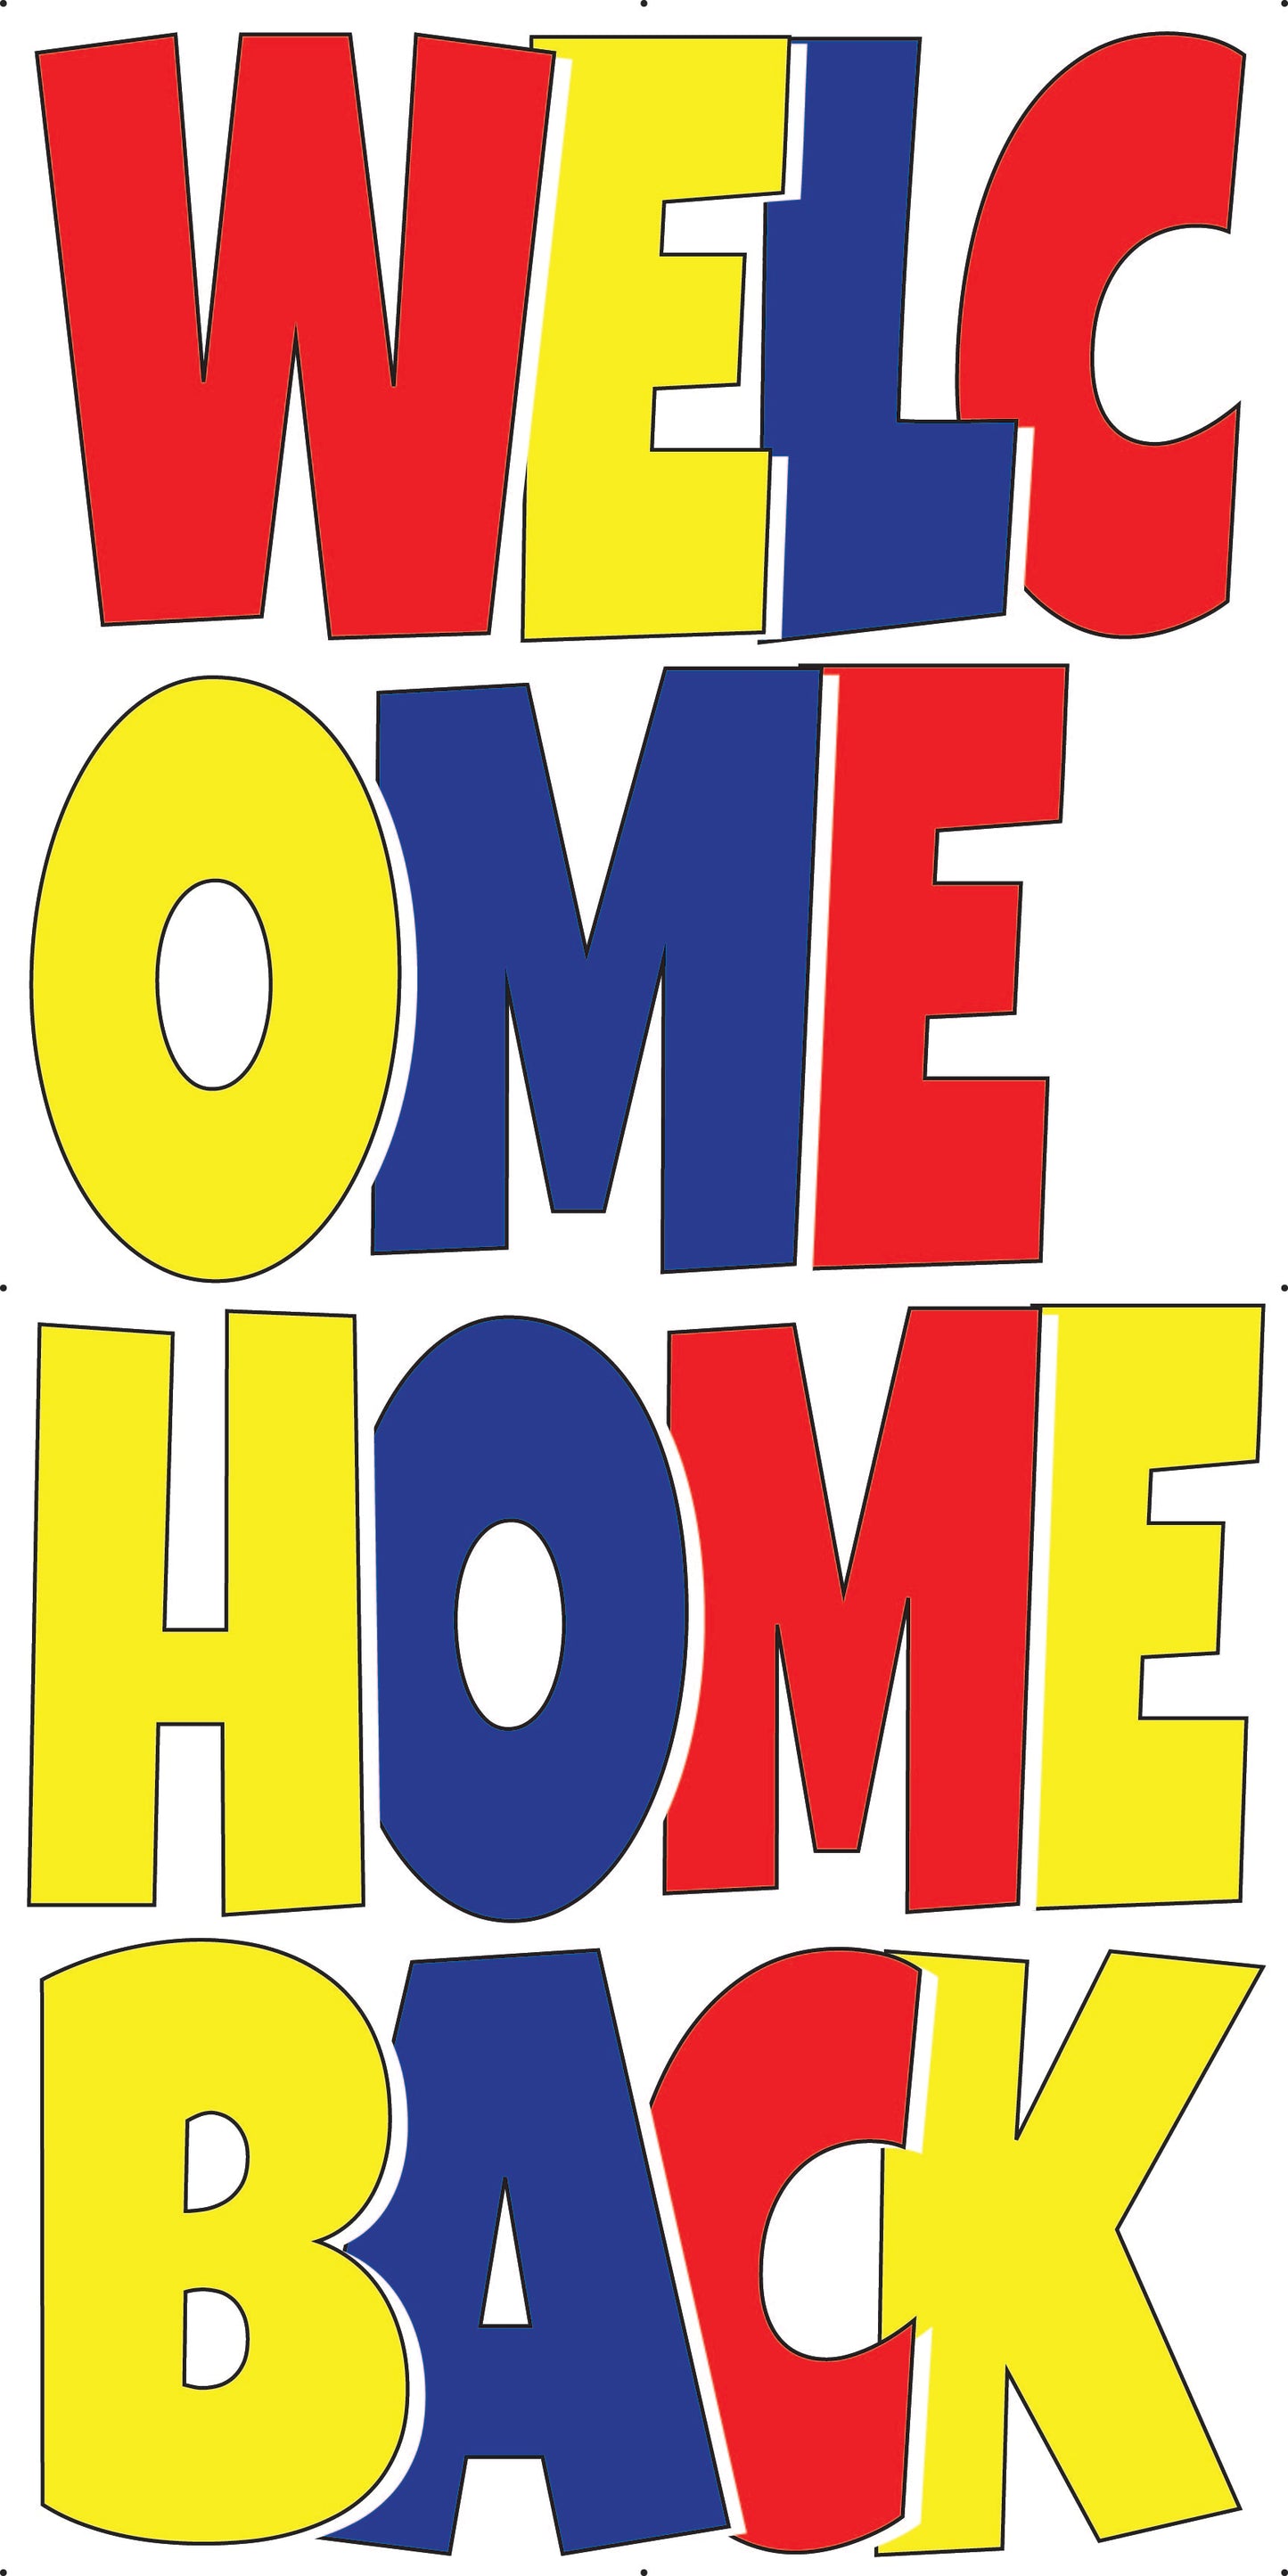 School - Welcome Home Back Ez Set Rainbow